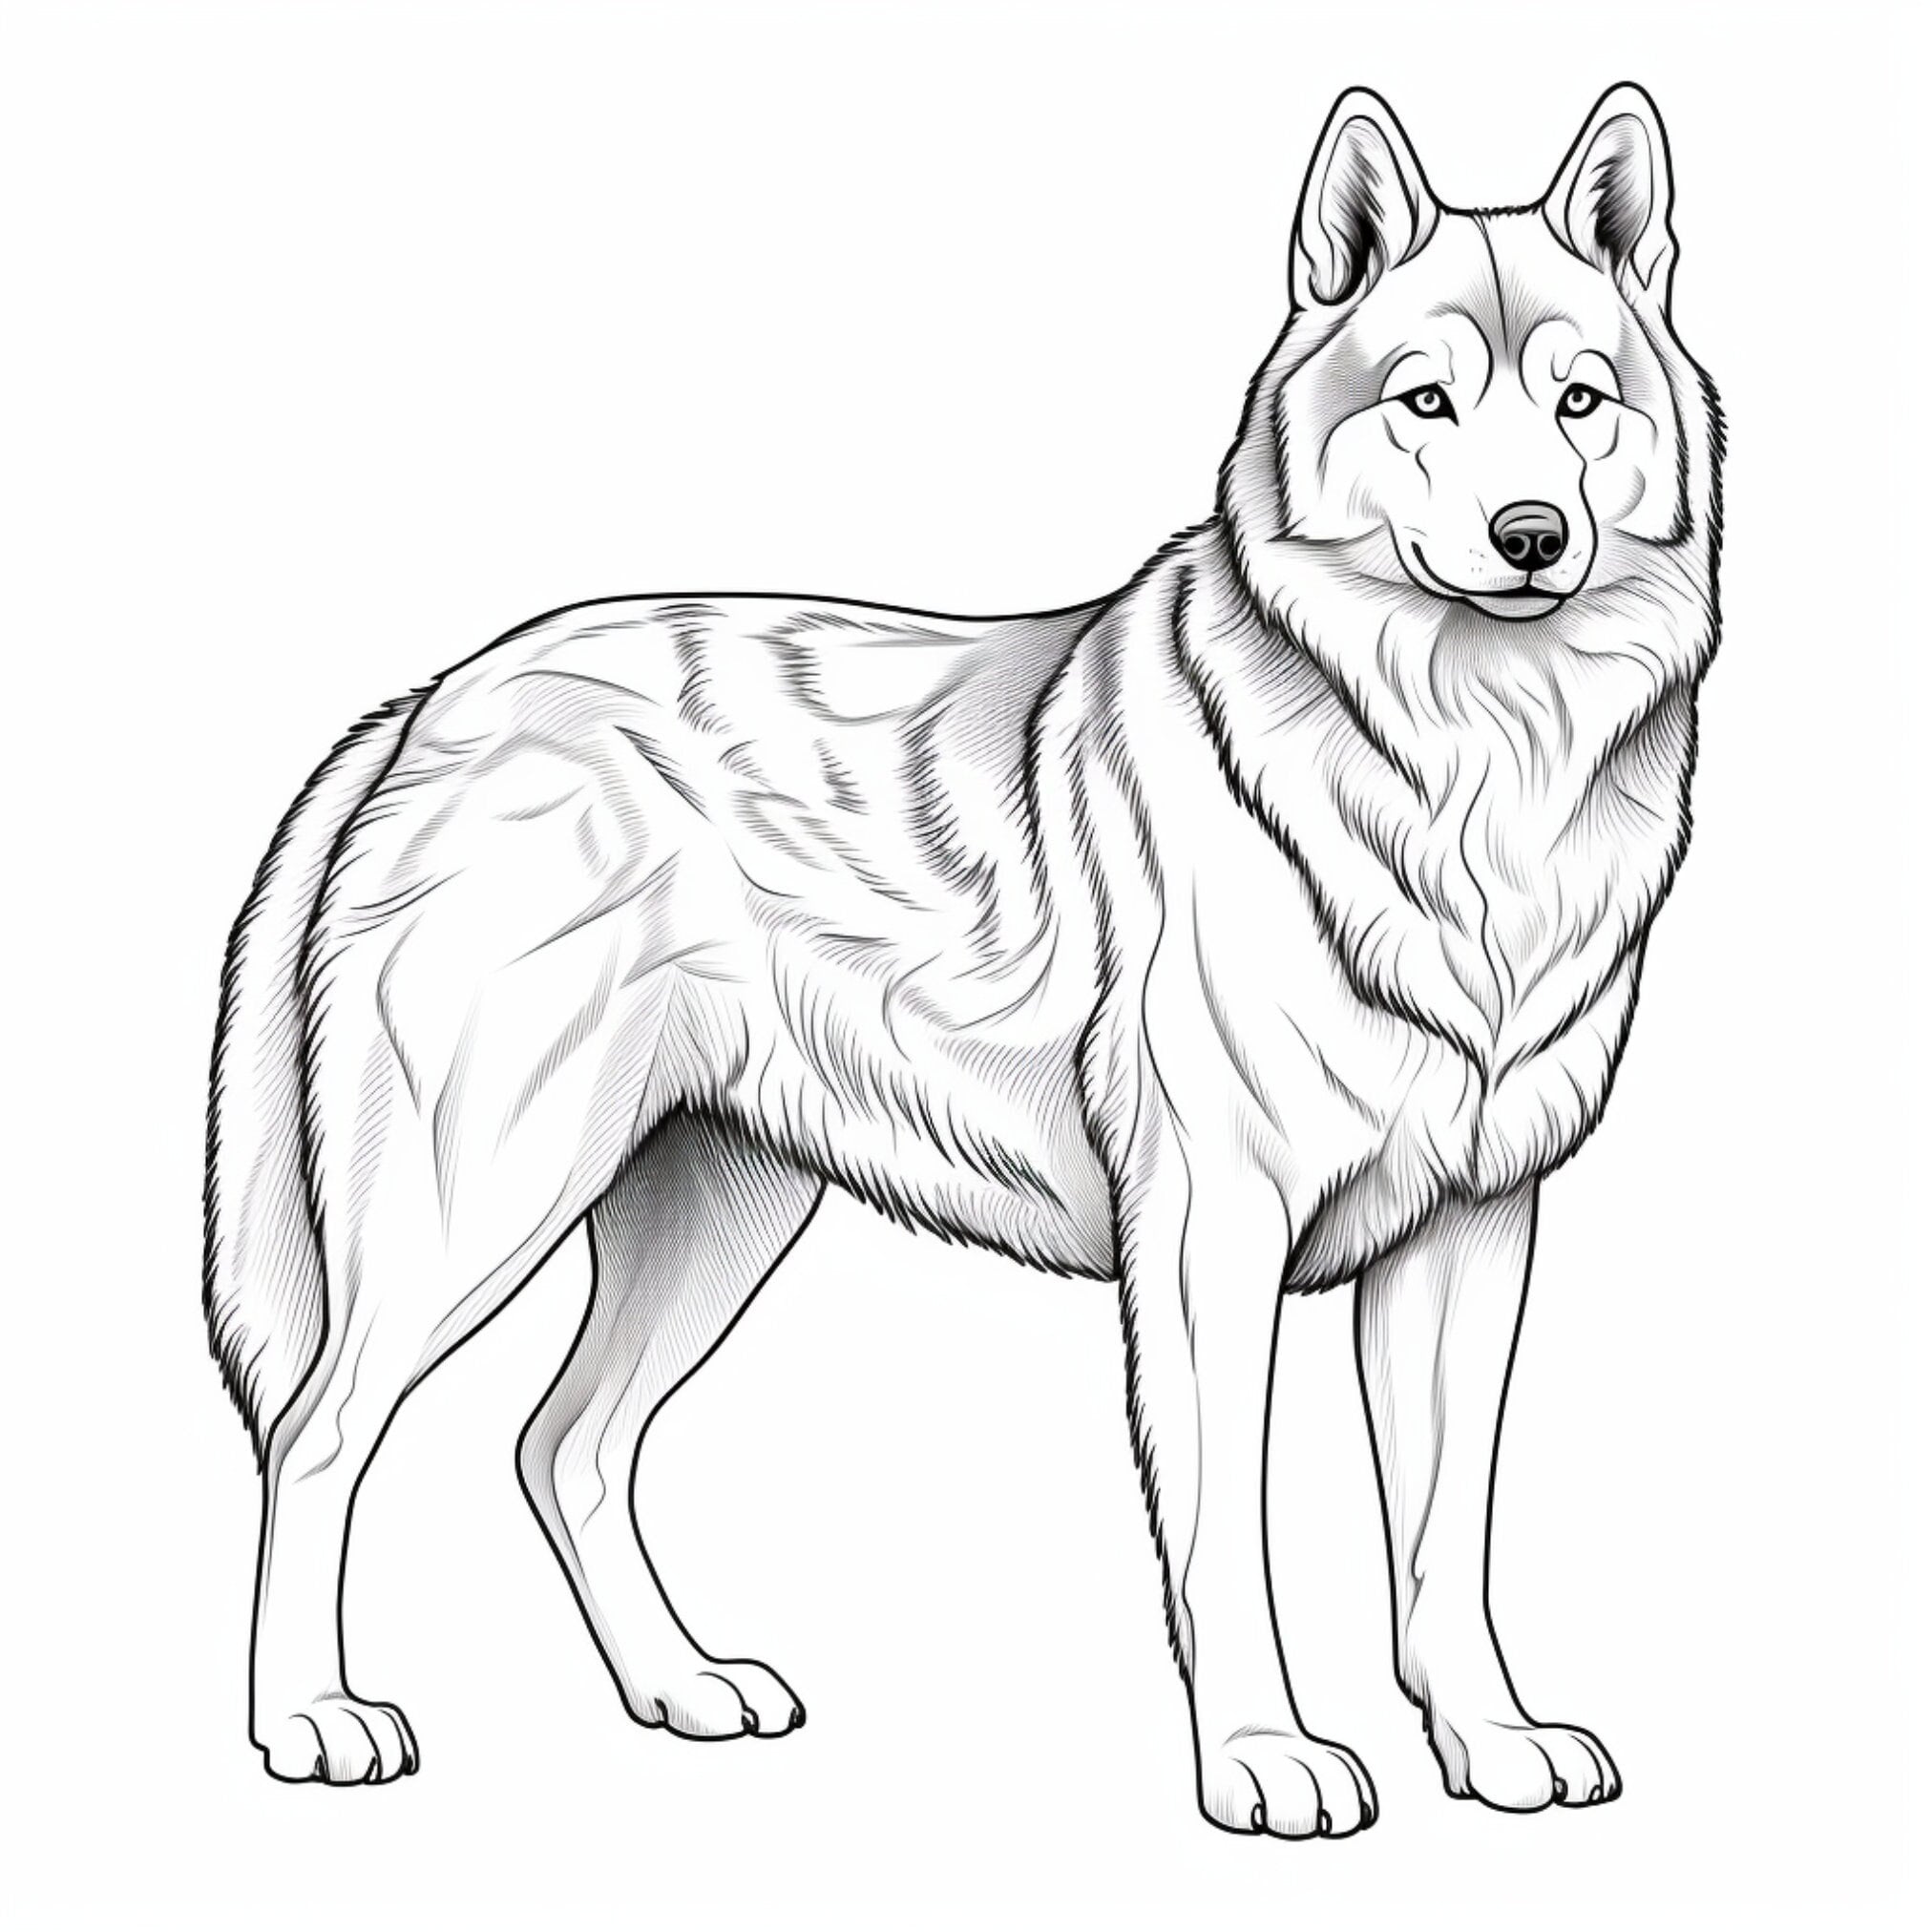 Husky dog coloring page pet portrait printable coloring page animal print coloring for adults instant download mercial use